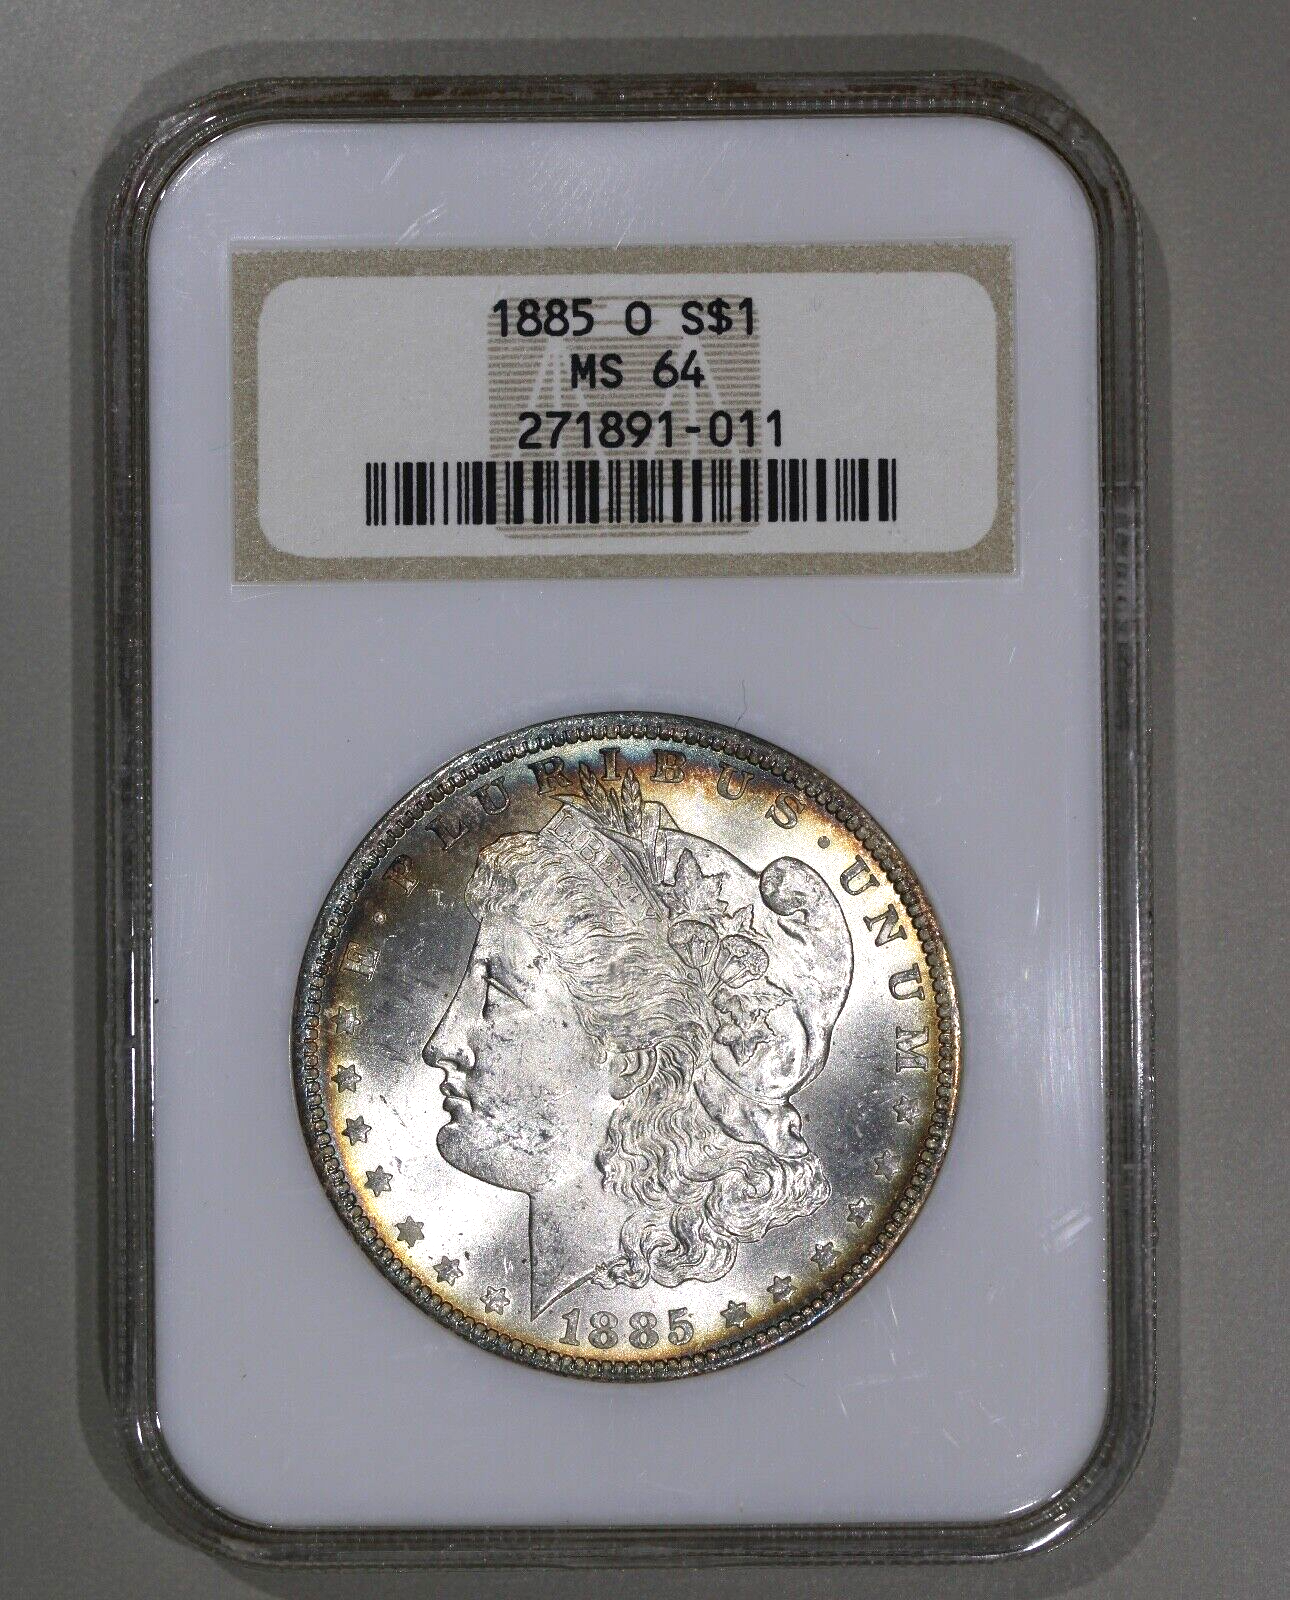 1885-O (MS64) Morgan Silver Dollar NGC Old Fatty Holder - RAINBOW Rim Toned $1